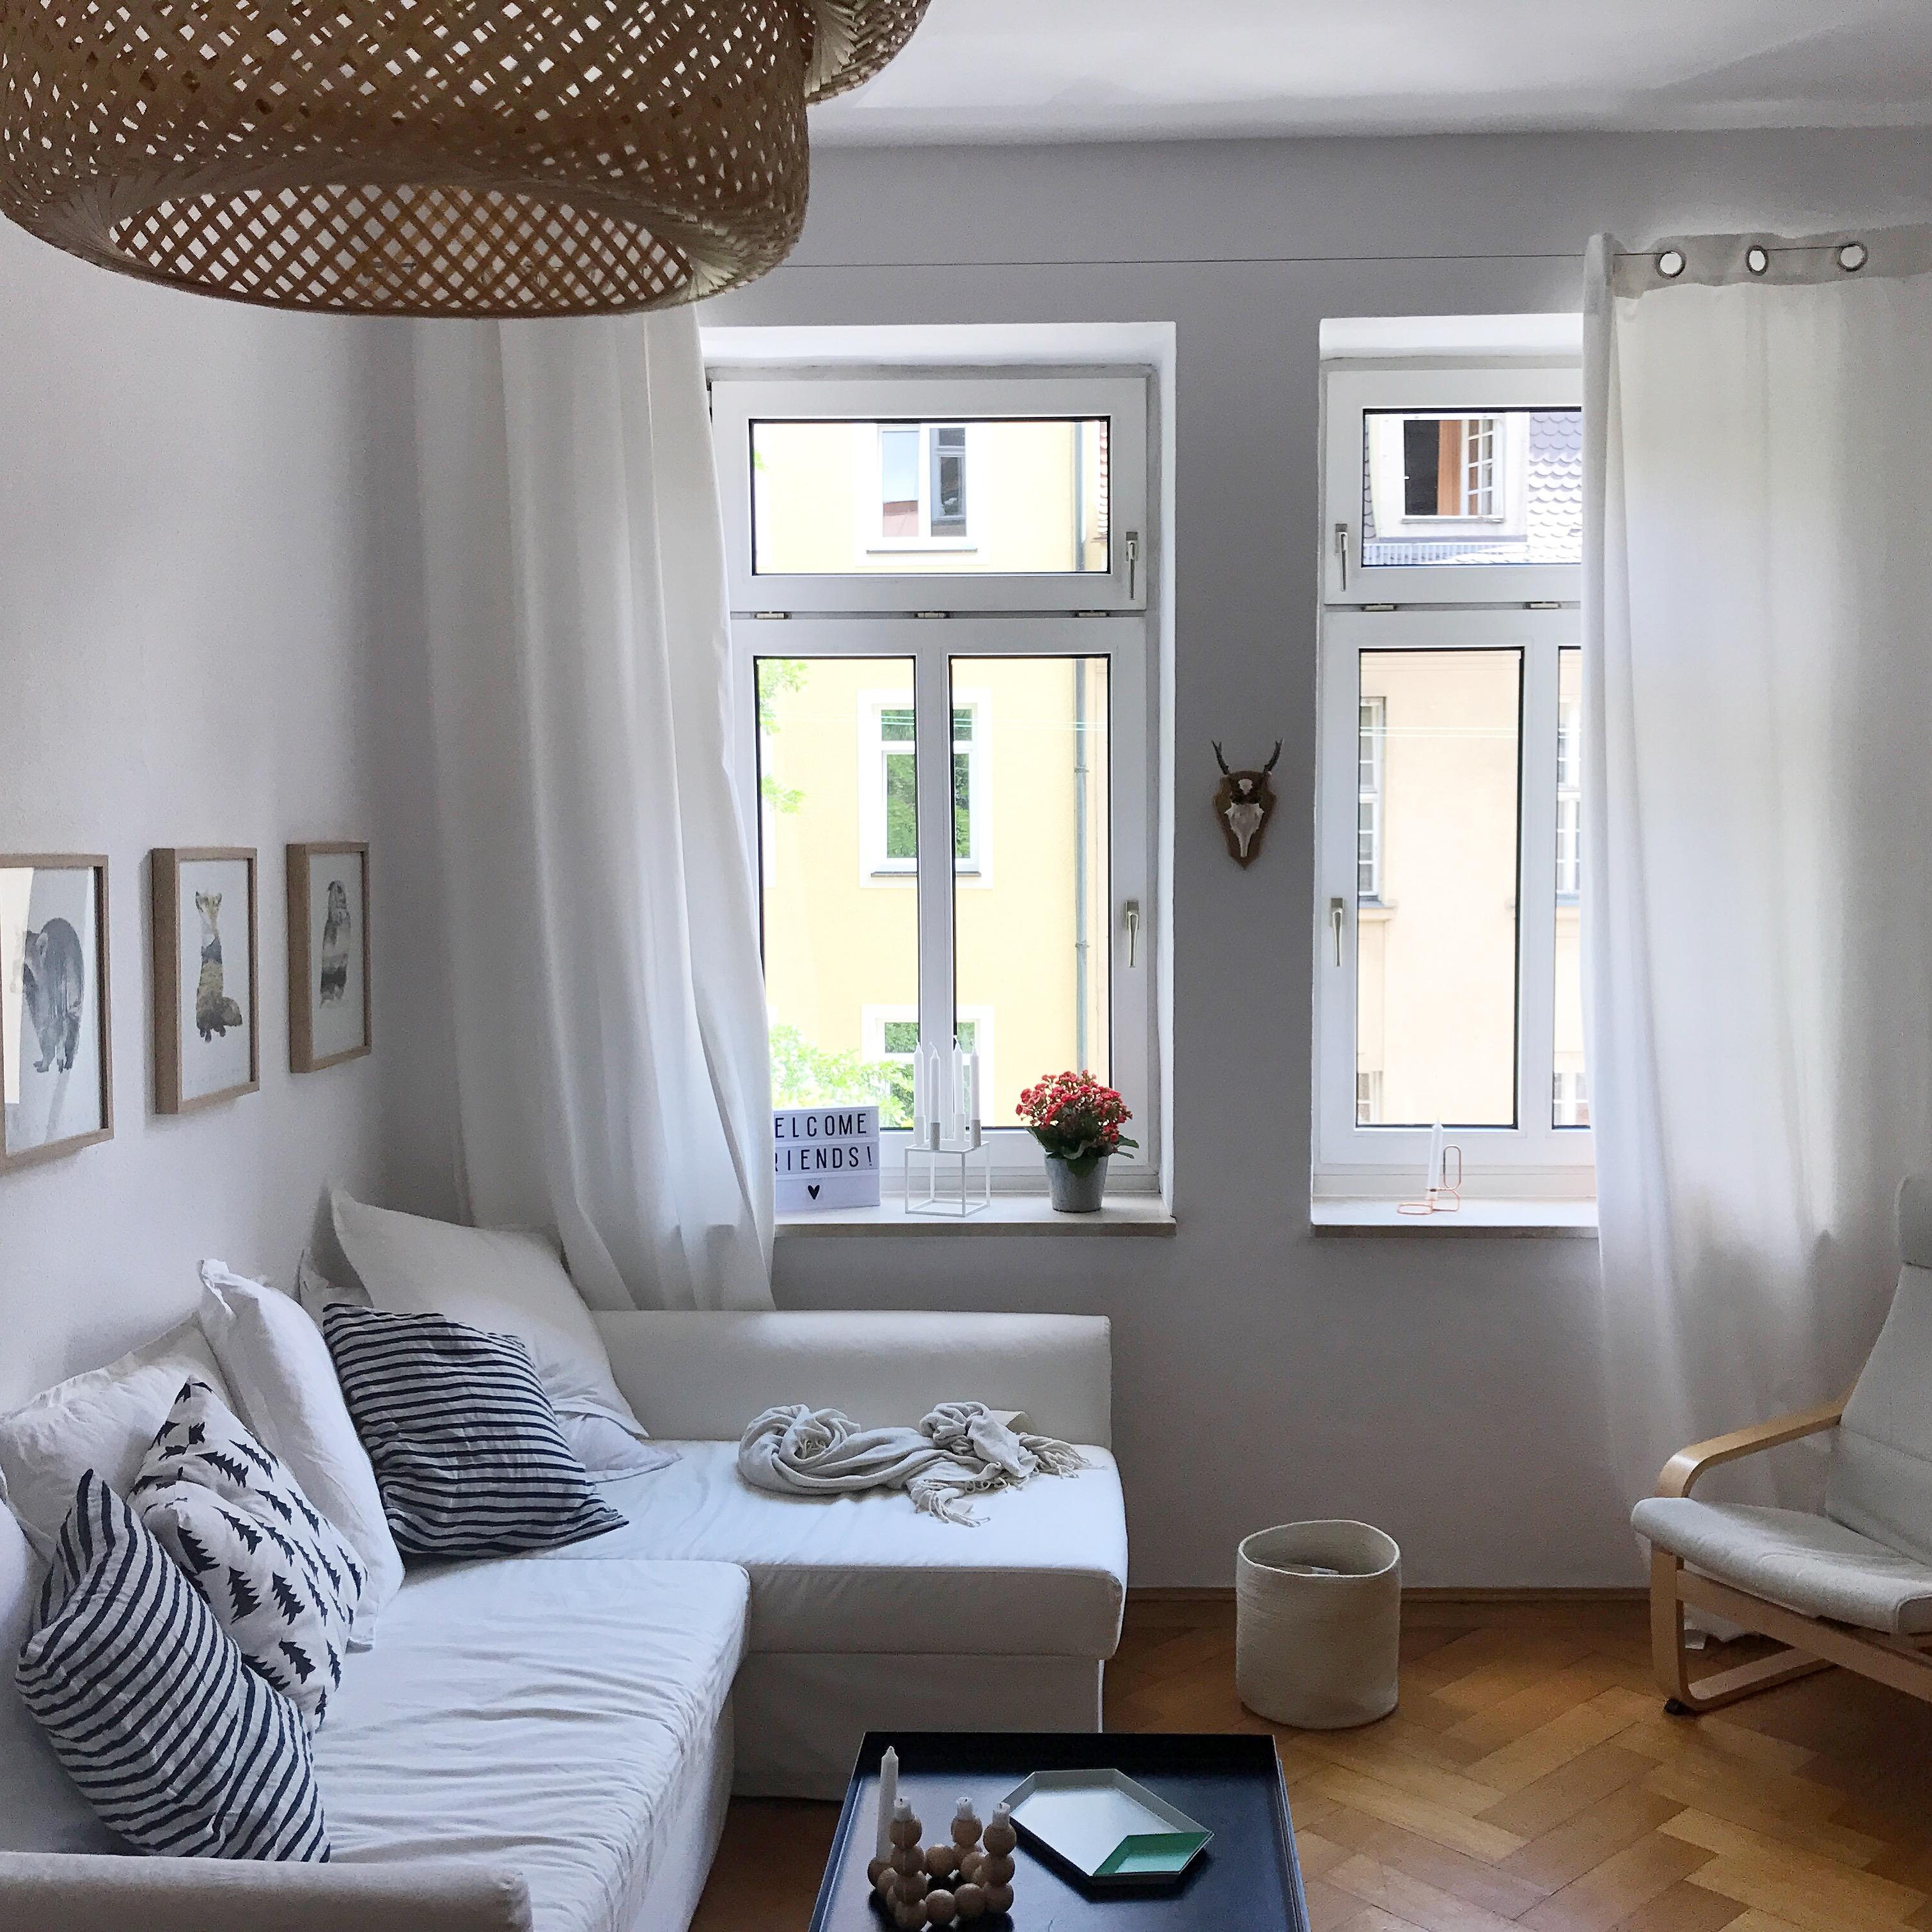 MorgenRuhe

#wohnzimmer #couchstyle #sofaliebe #altbau #whiteliving #scandinaviandesign #ruhe